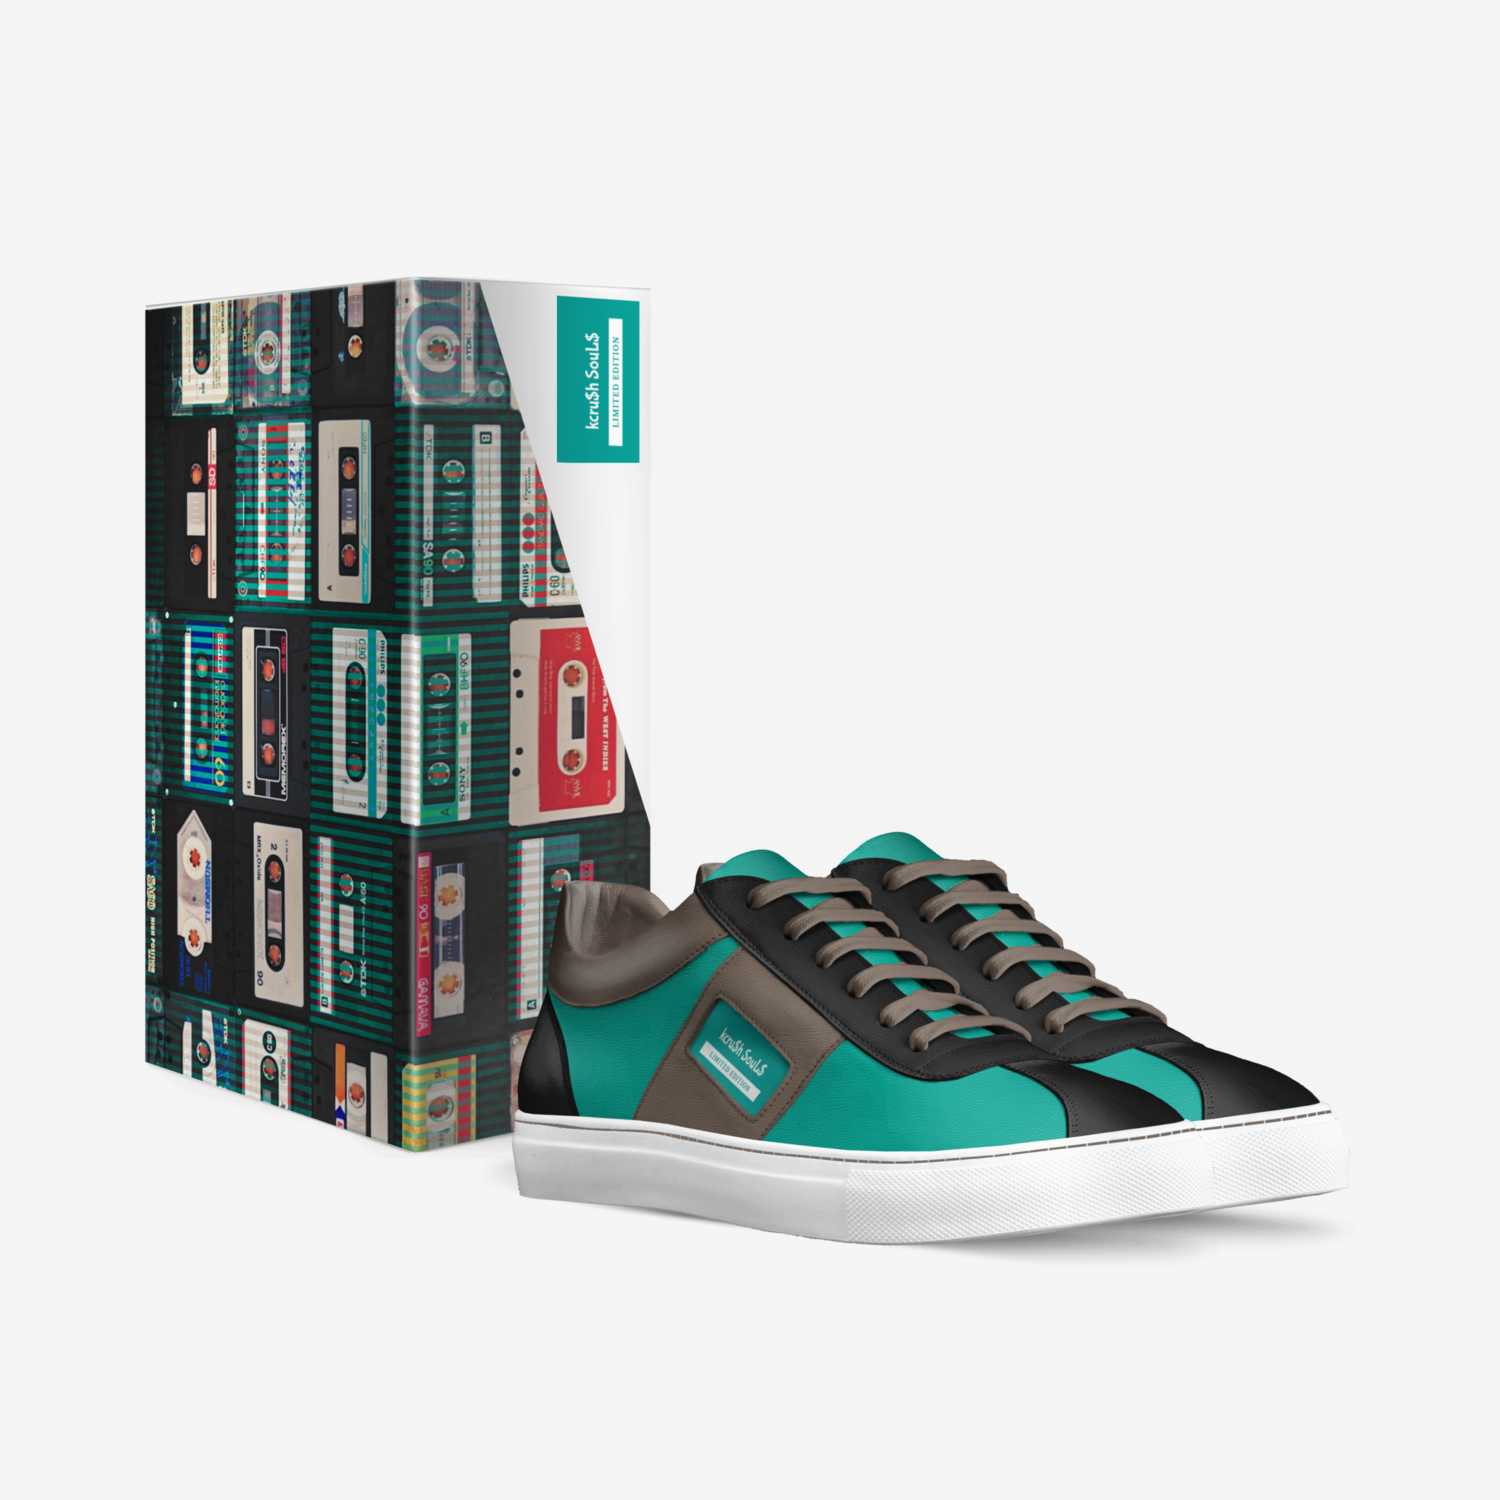 kcru$h SoLe$ custom made in Italy shoes by Kacey Kubiszewski | Box view